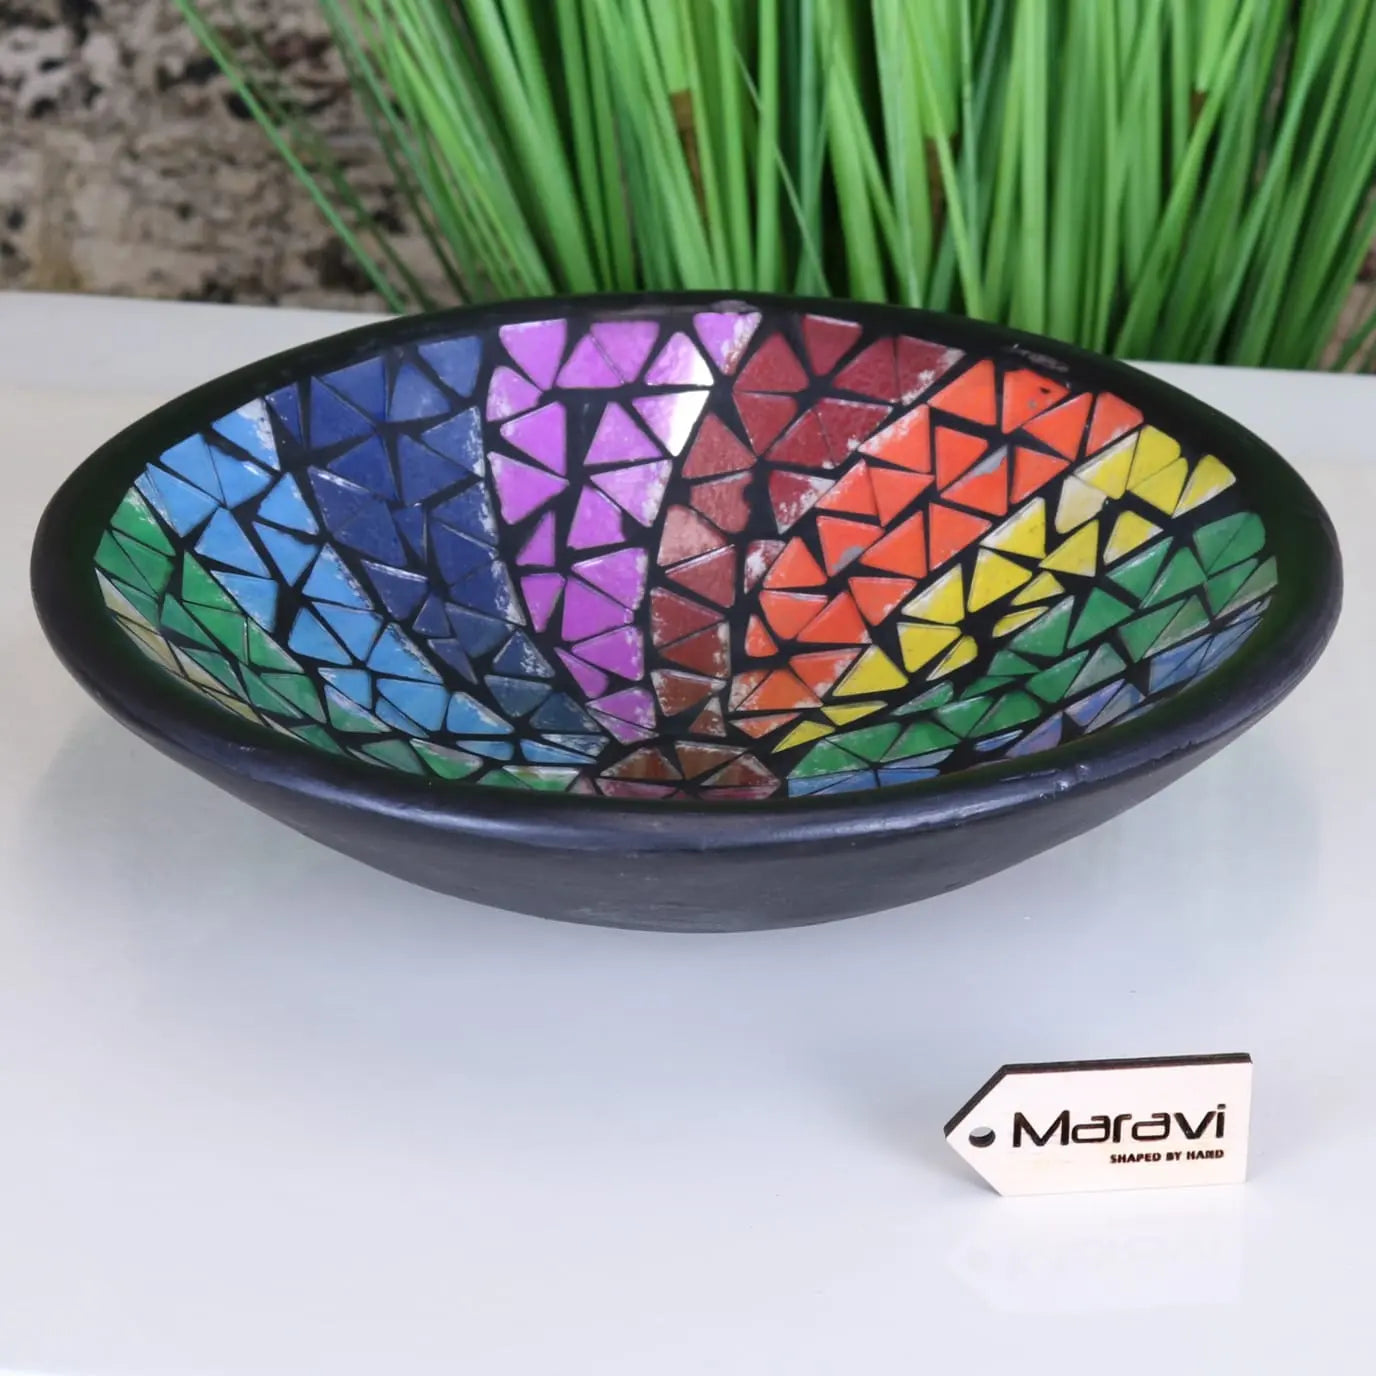 Dubdi Mosaic Bowl Rainbow Curve Design - Top Angled View